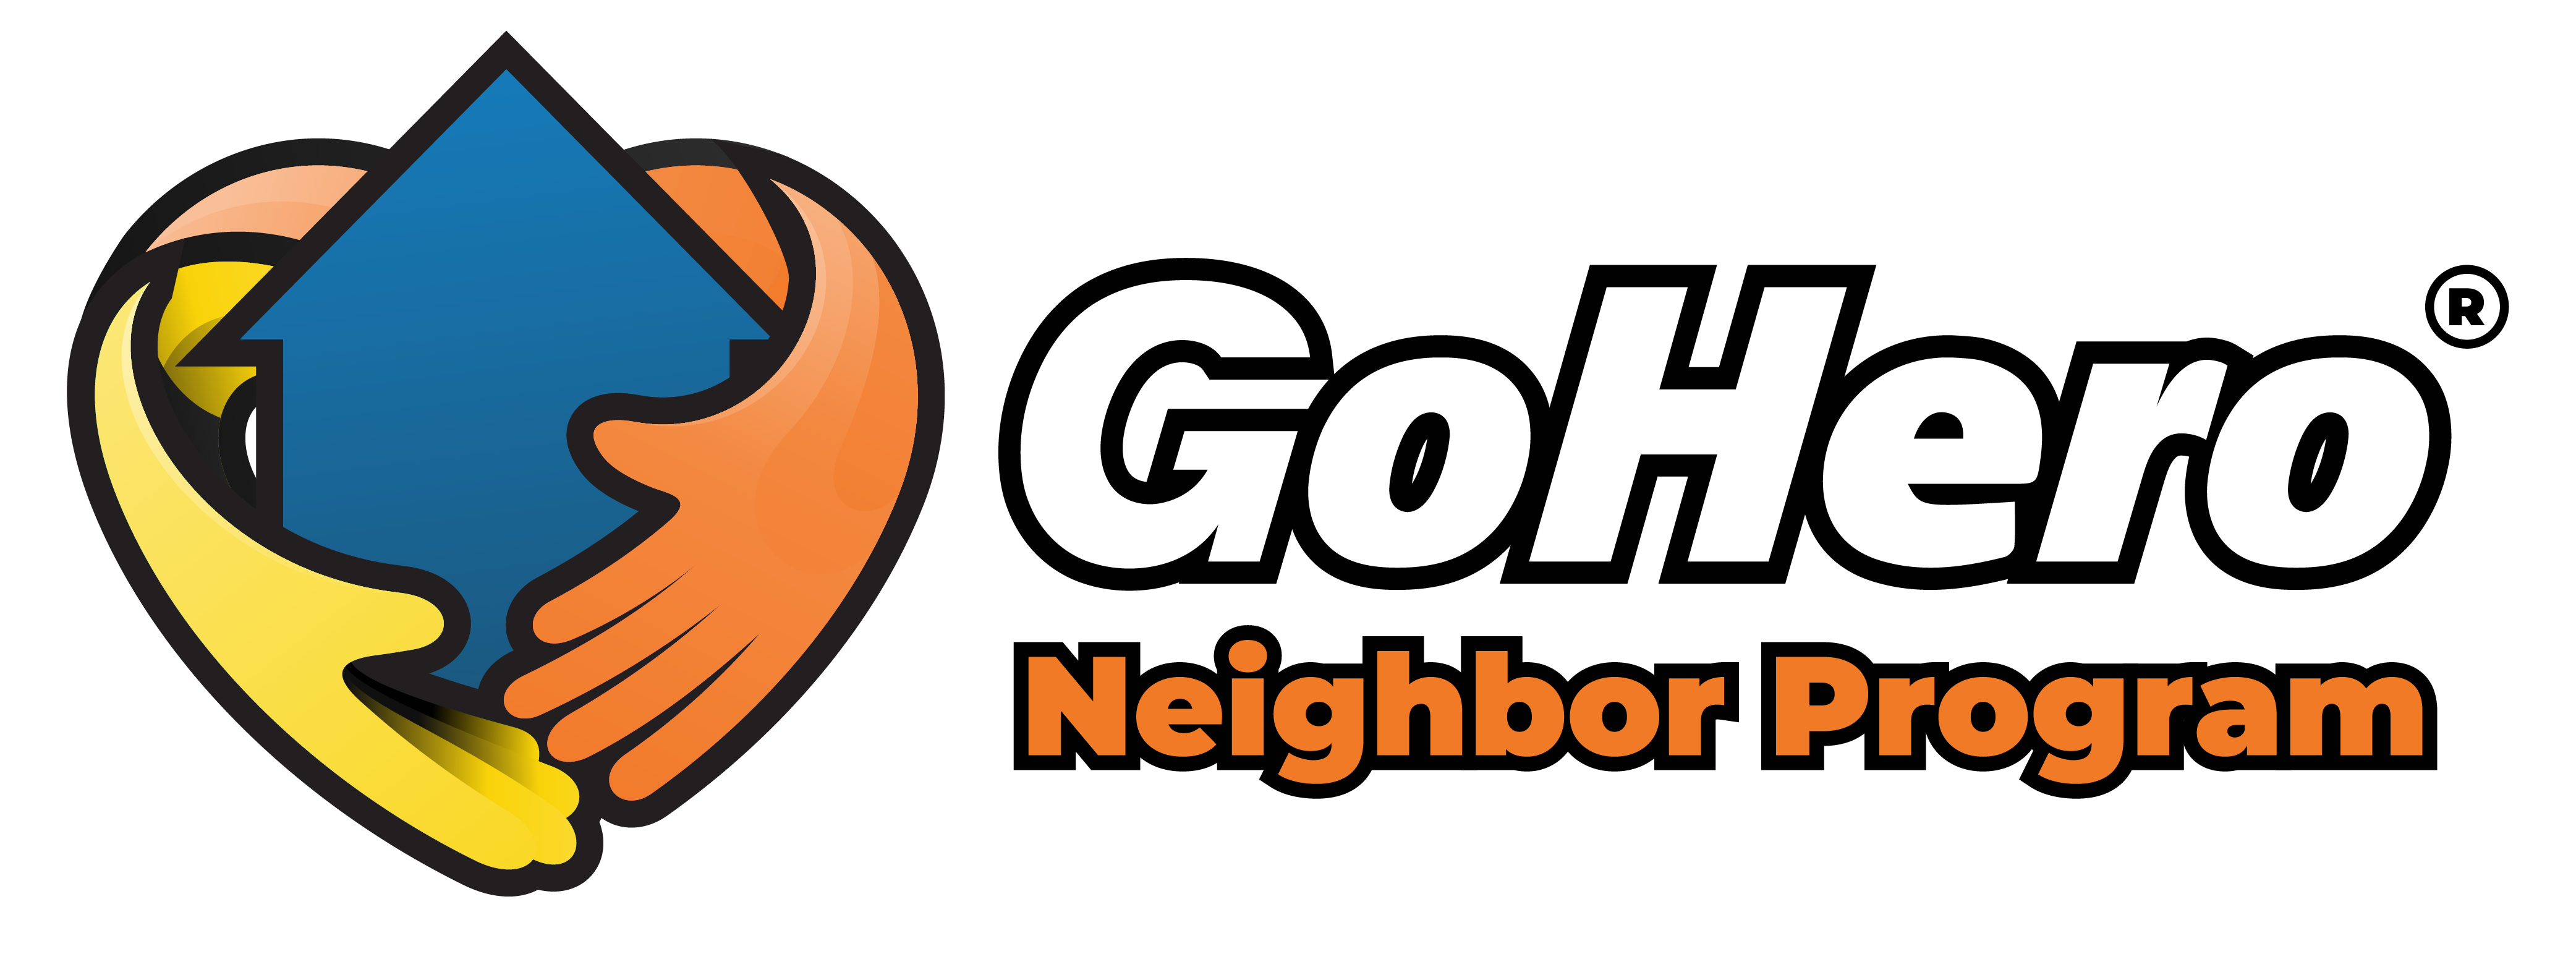 Go Hero Neighbor Program Logo Horizontal